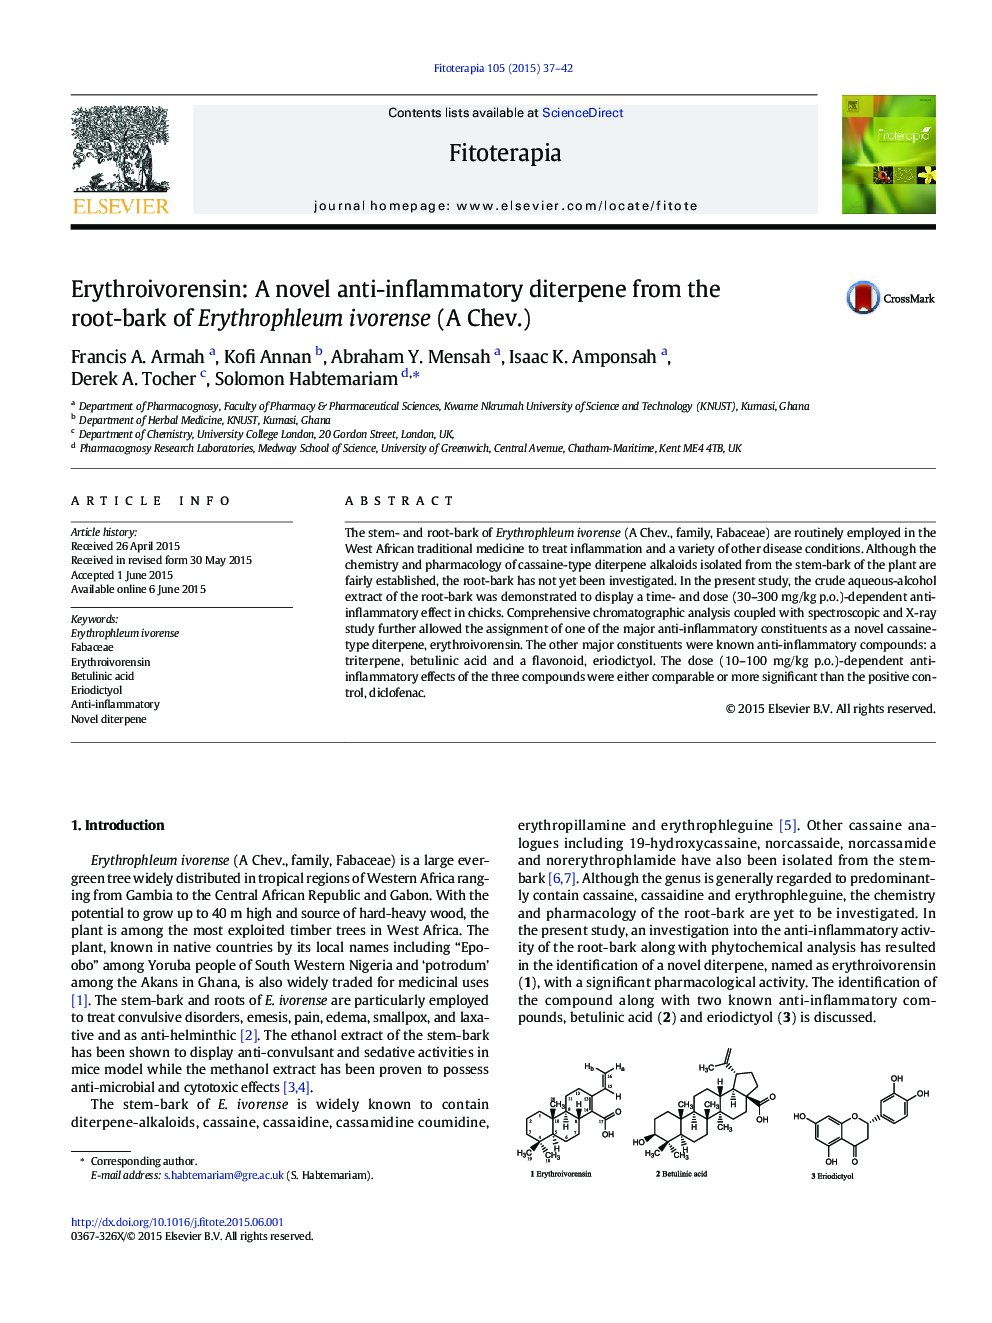 Erythroivorensin: A novel anti-inflammatory diterpene from the root-bark of Erythrophleum ivorense (A Chev.)